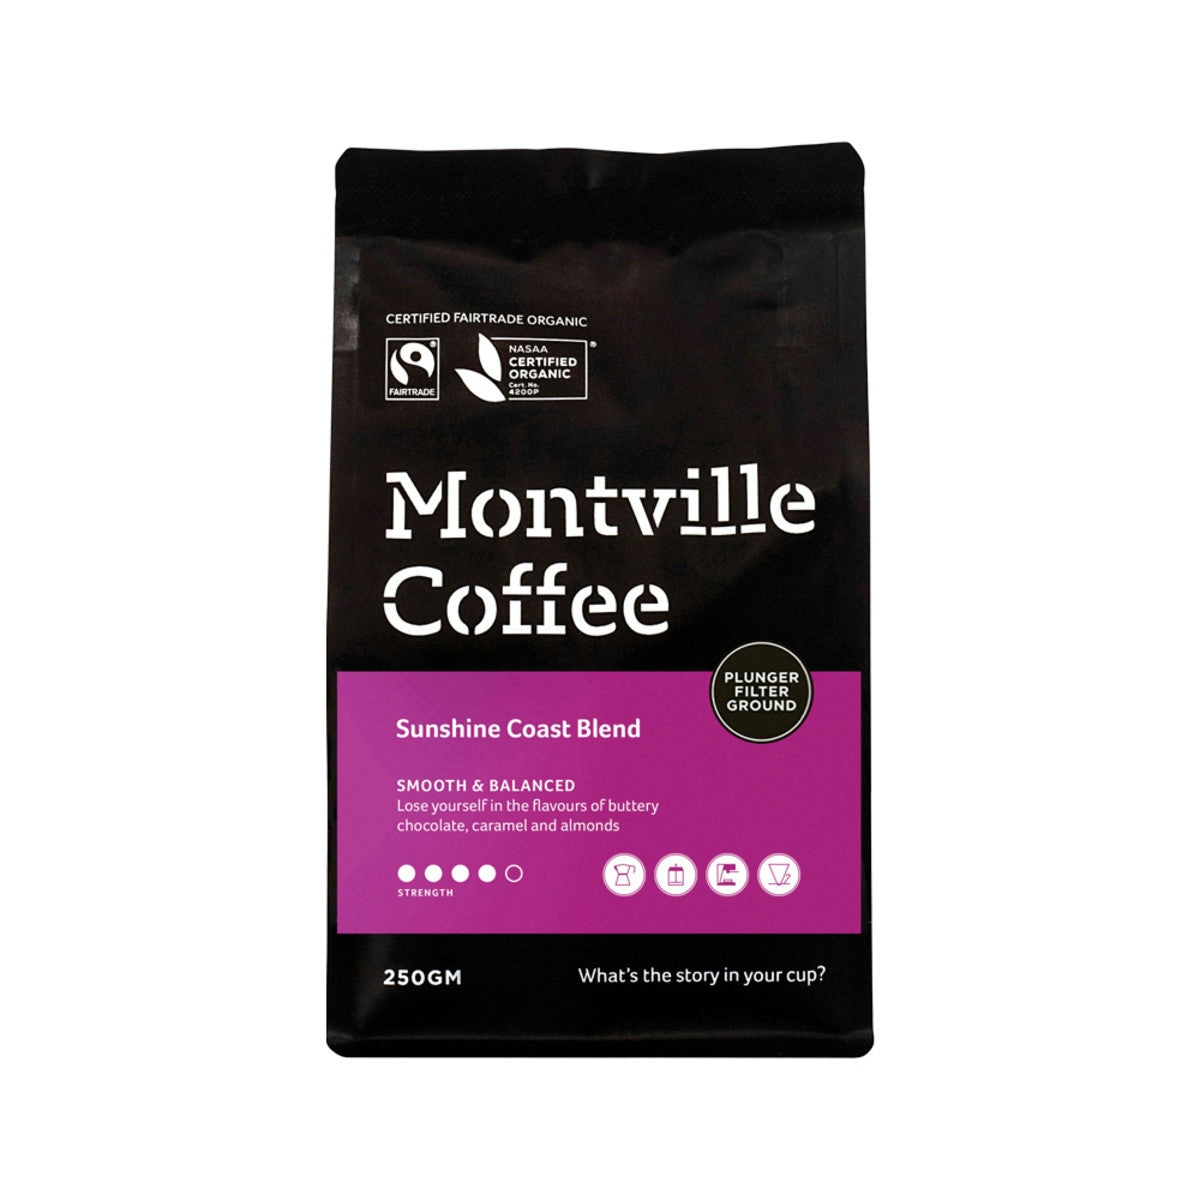 image of Montville Coffee Organic Sunshine Coast Blend Plunger Filter Ground 250g on white background